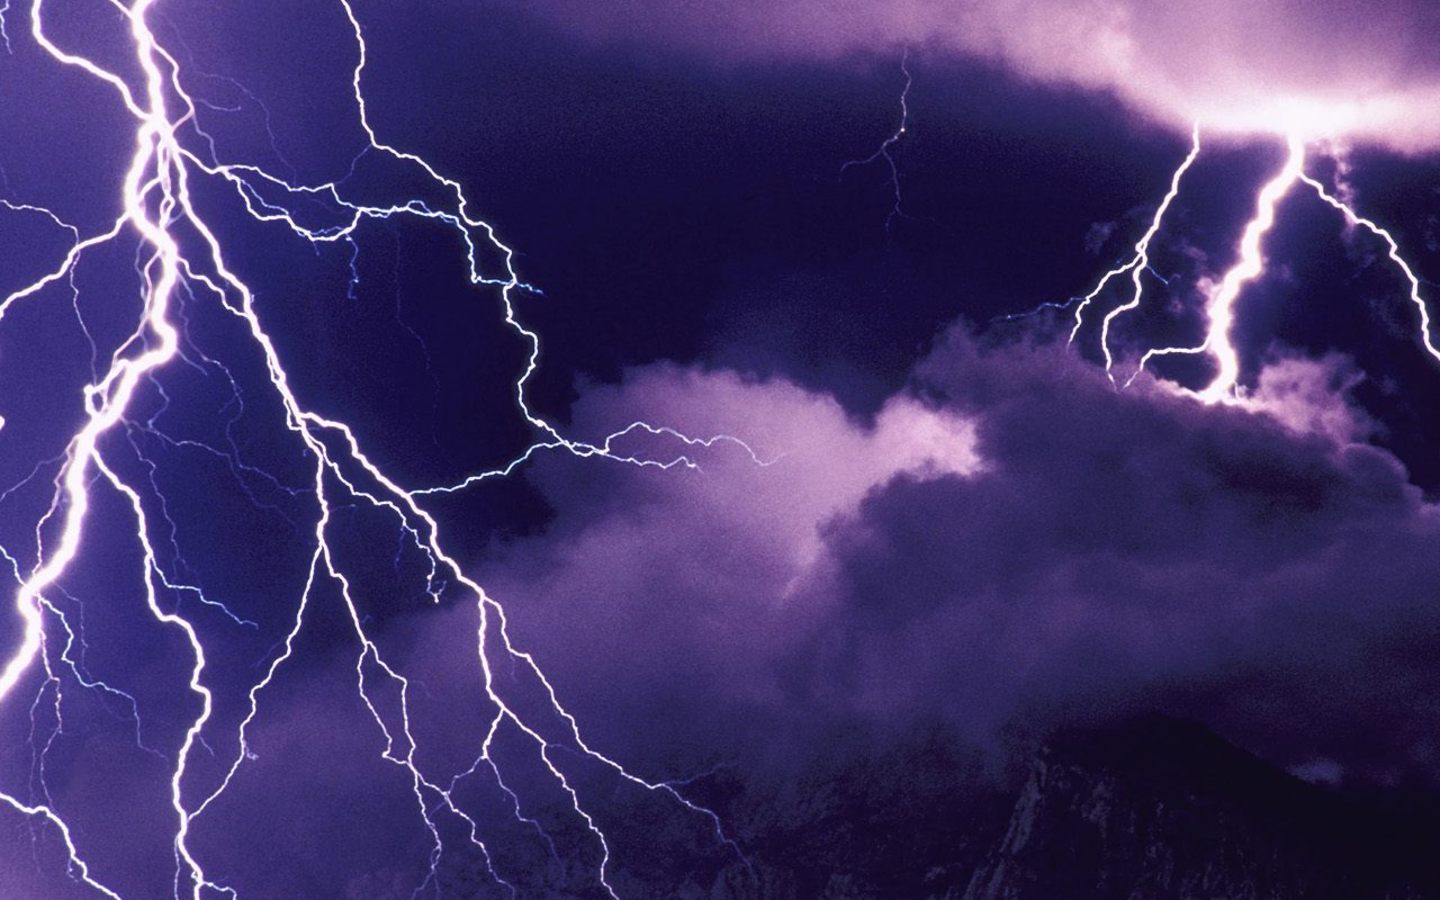 Lightning strikes in the sky over a mountain. - Lightning